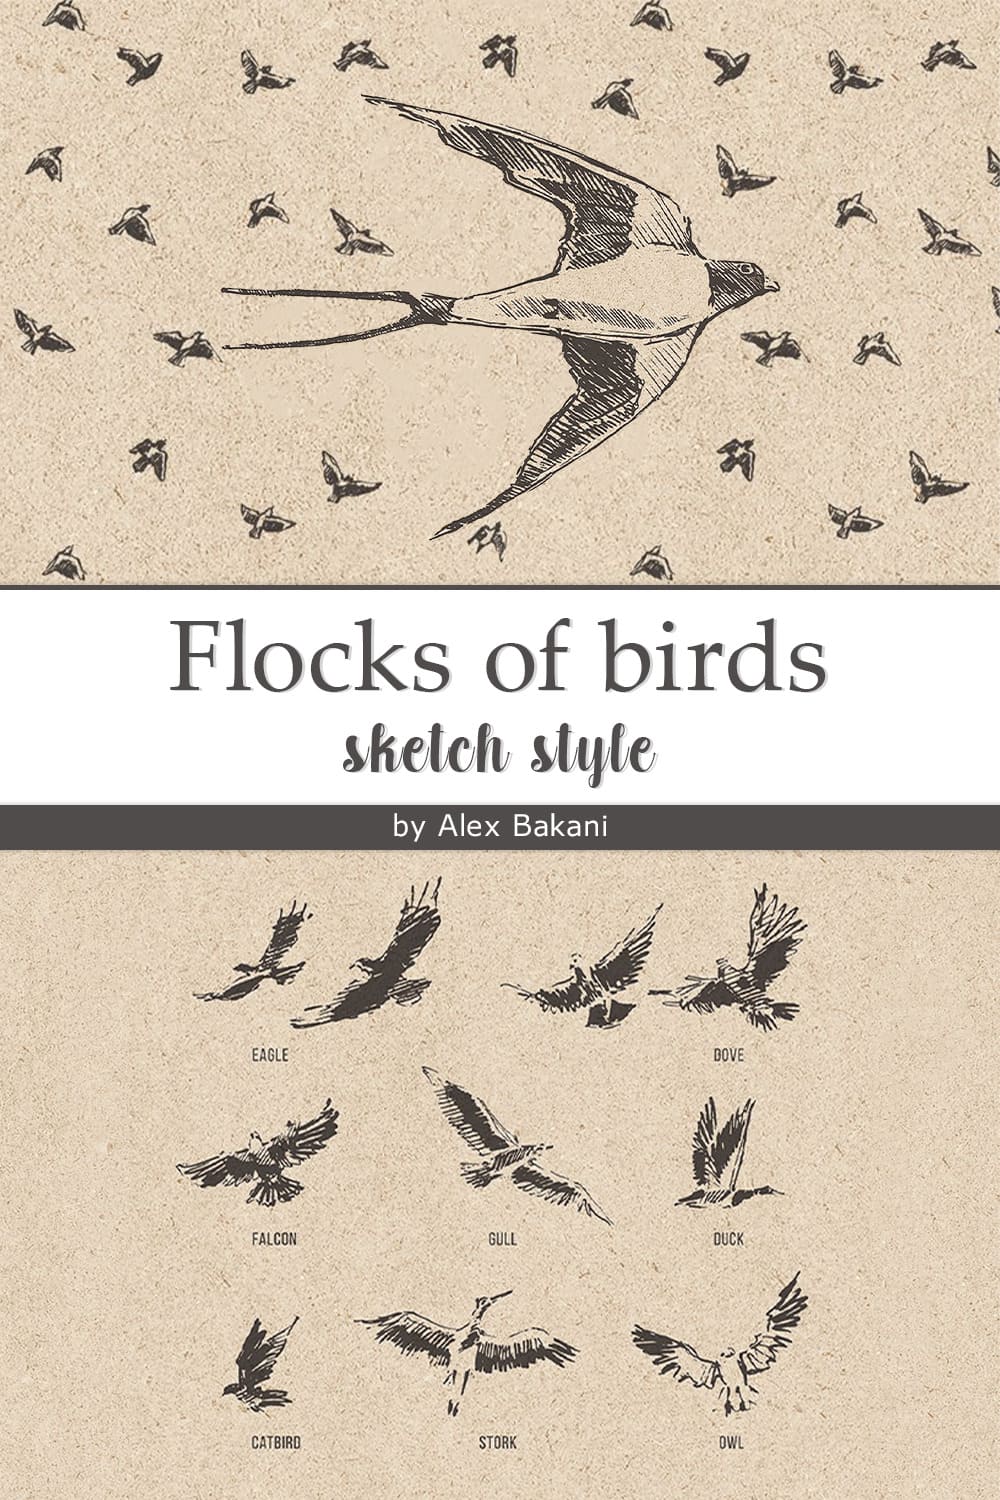 Flocks of Birds, Sketch Style pinterest image.